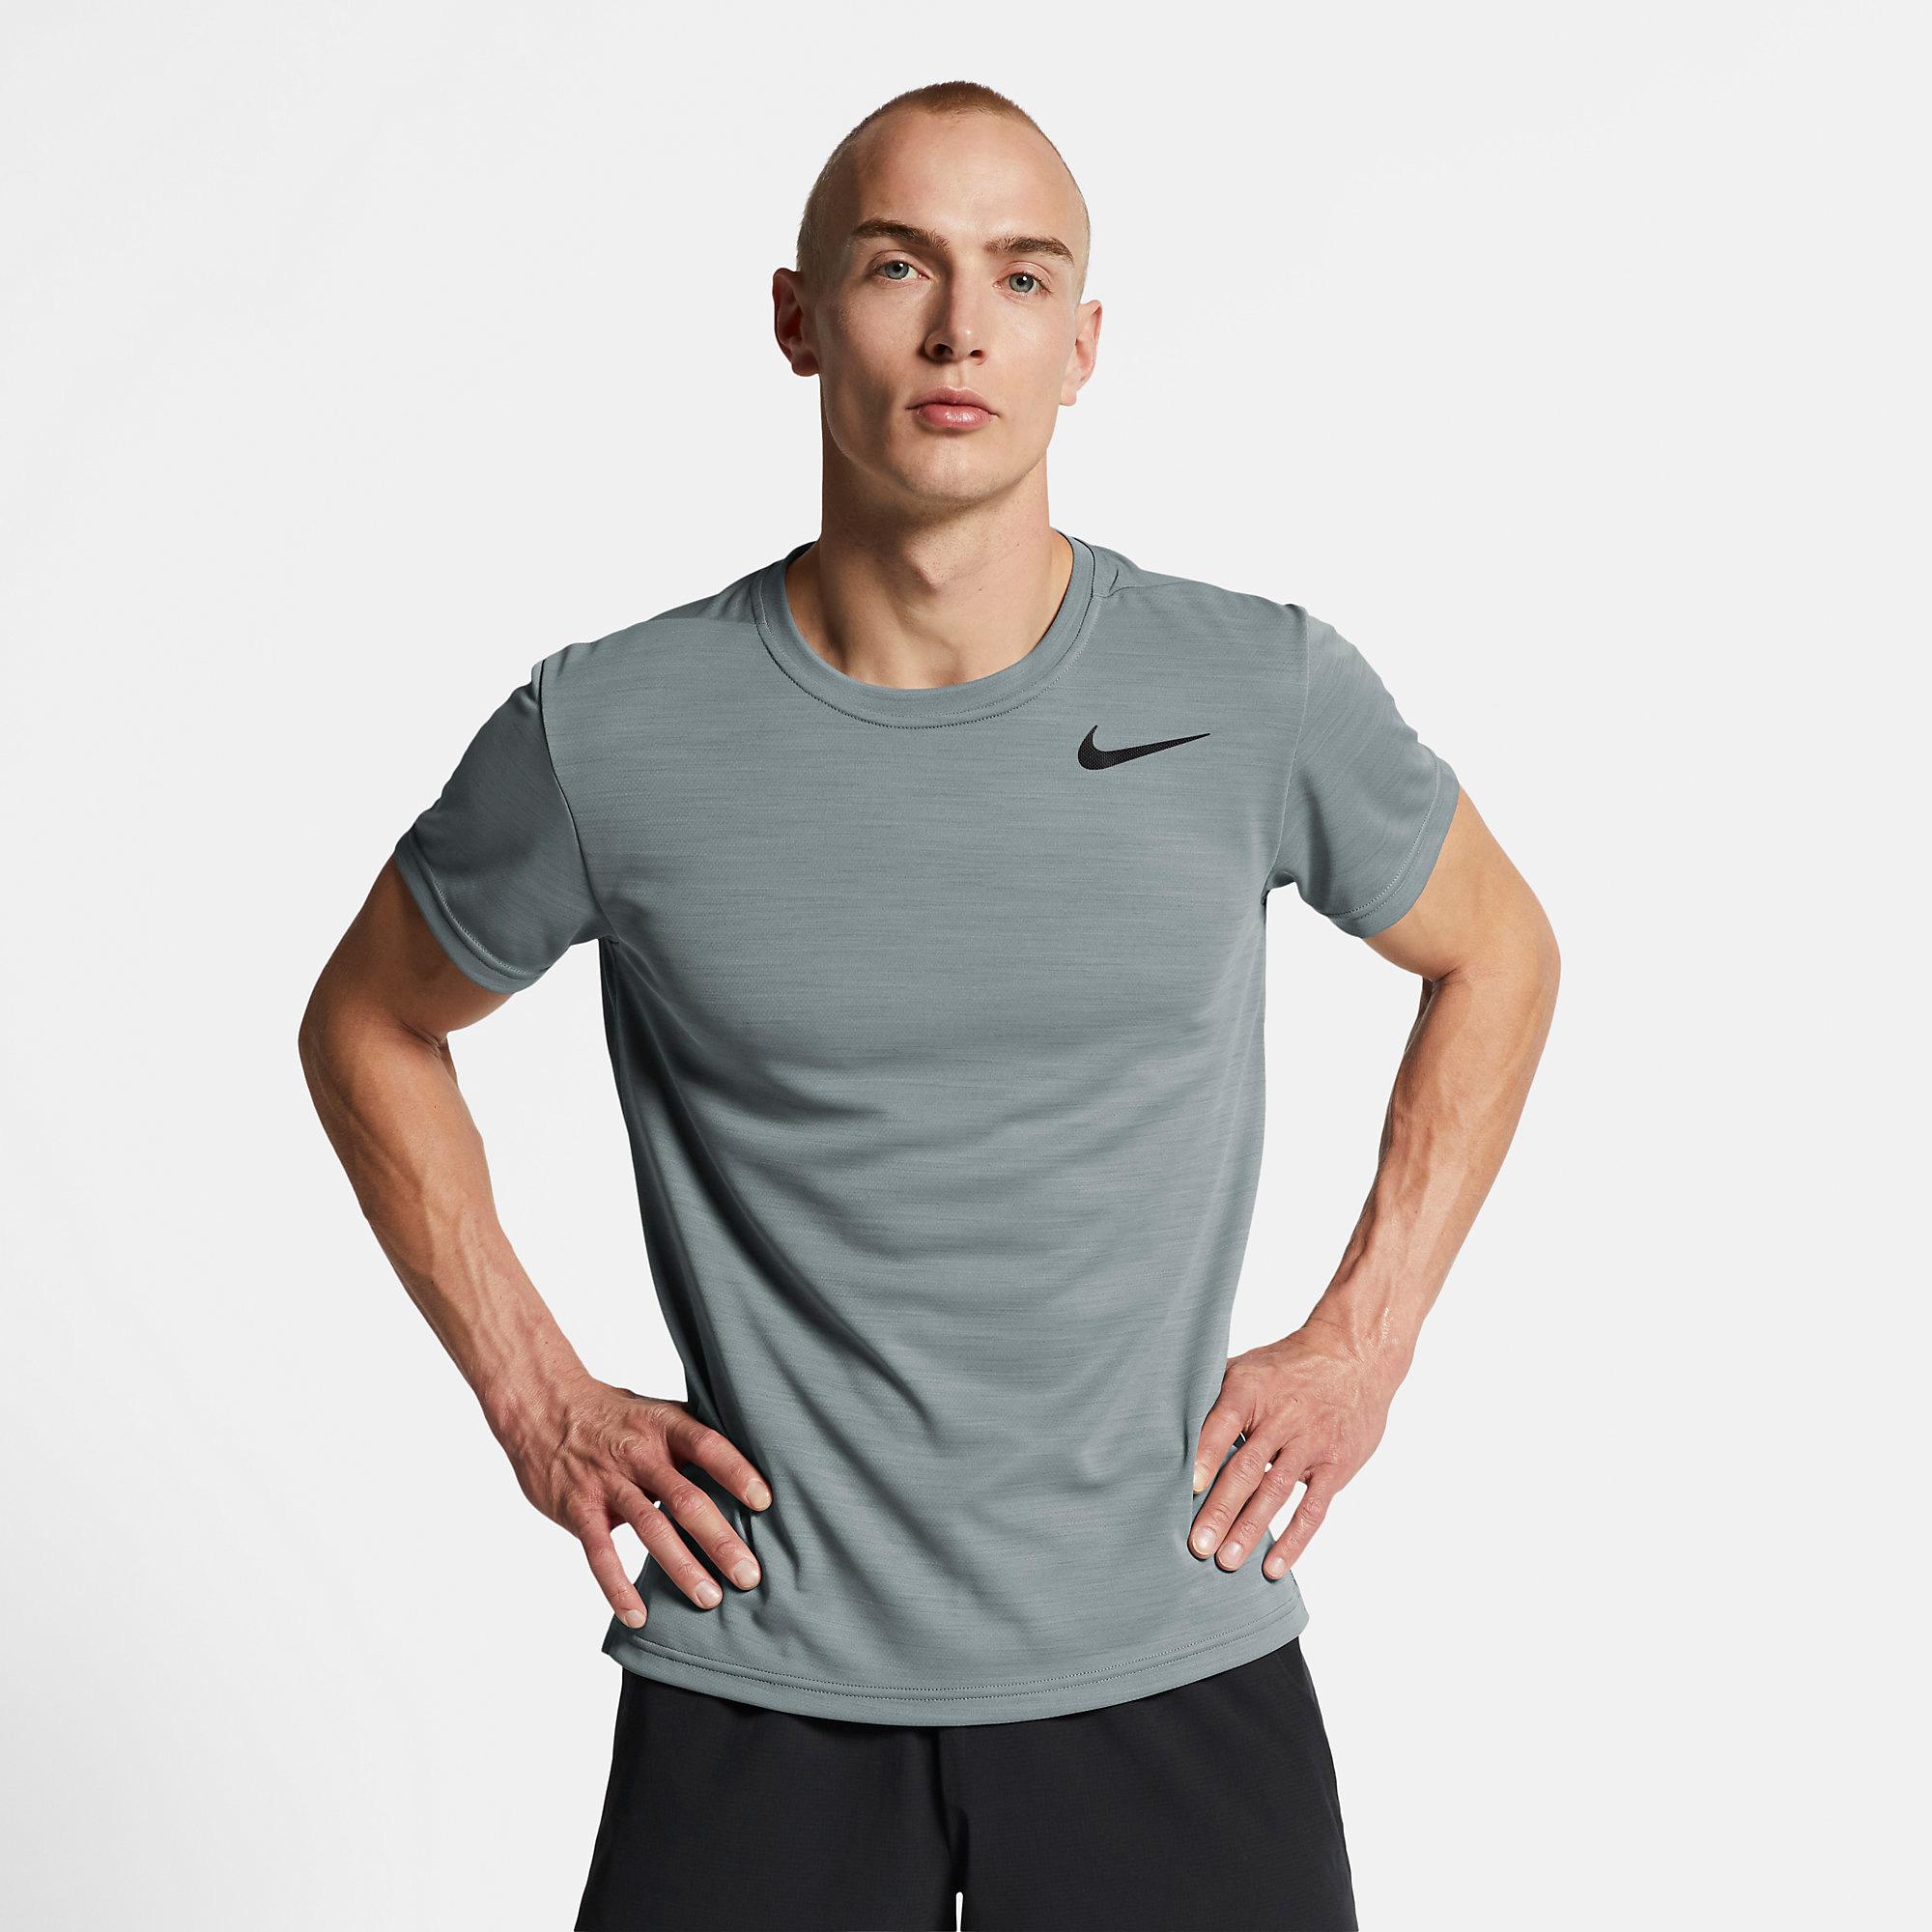 Nike Mens Superset Training Top - Grey/Black - Tennisnuts.com